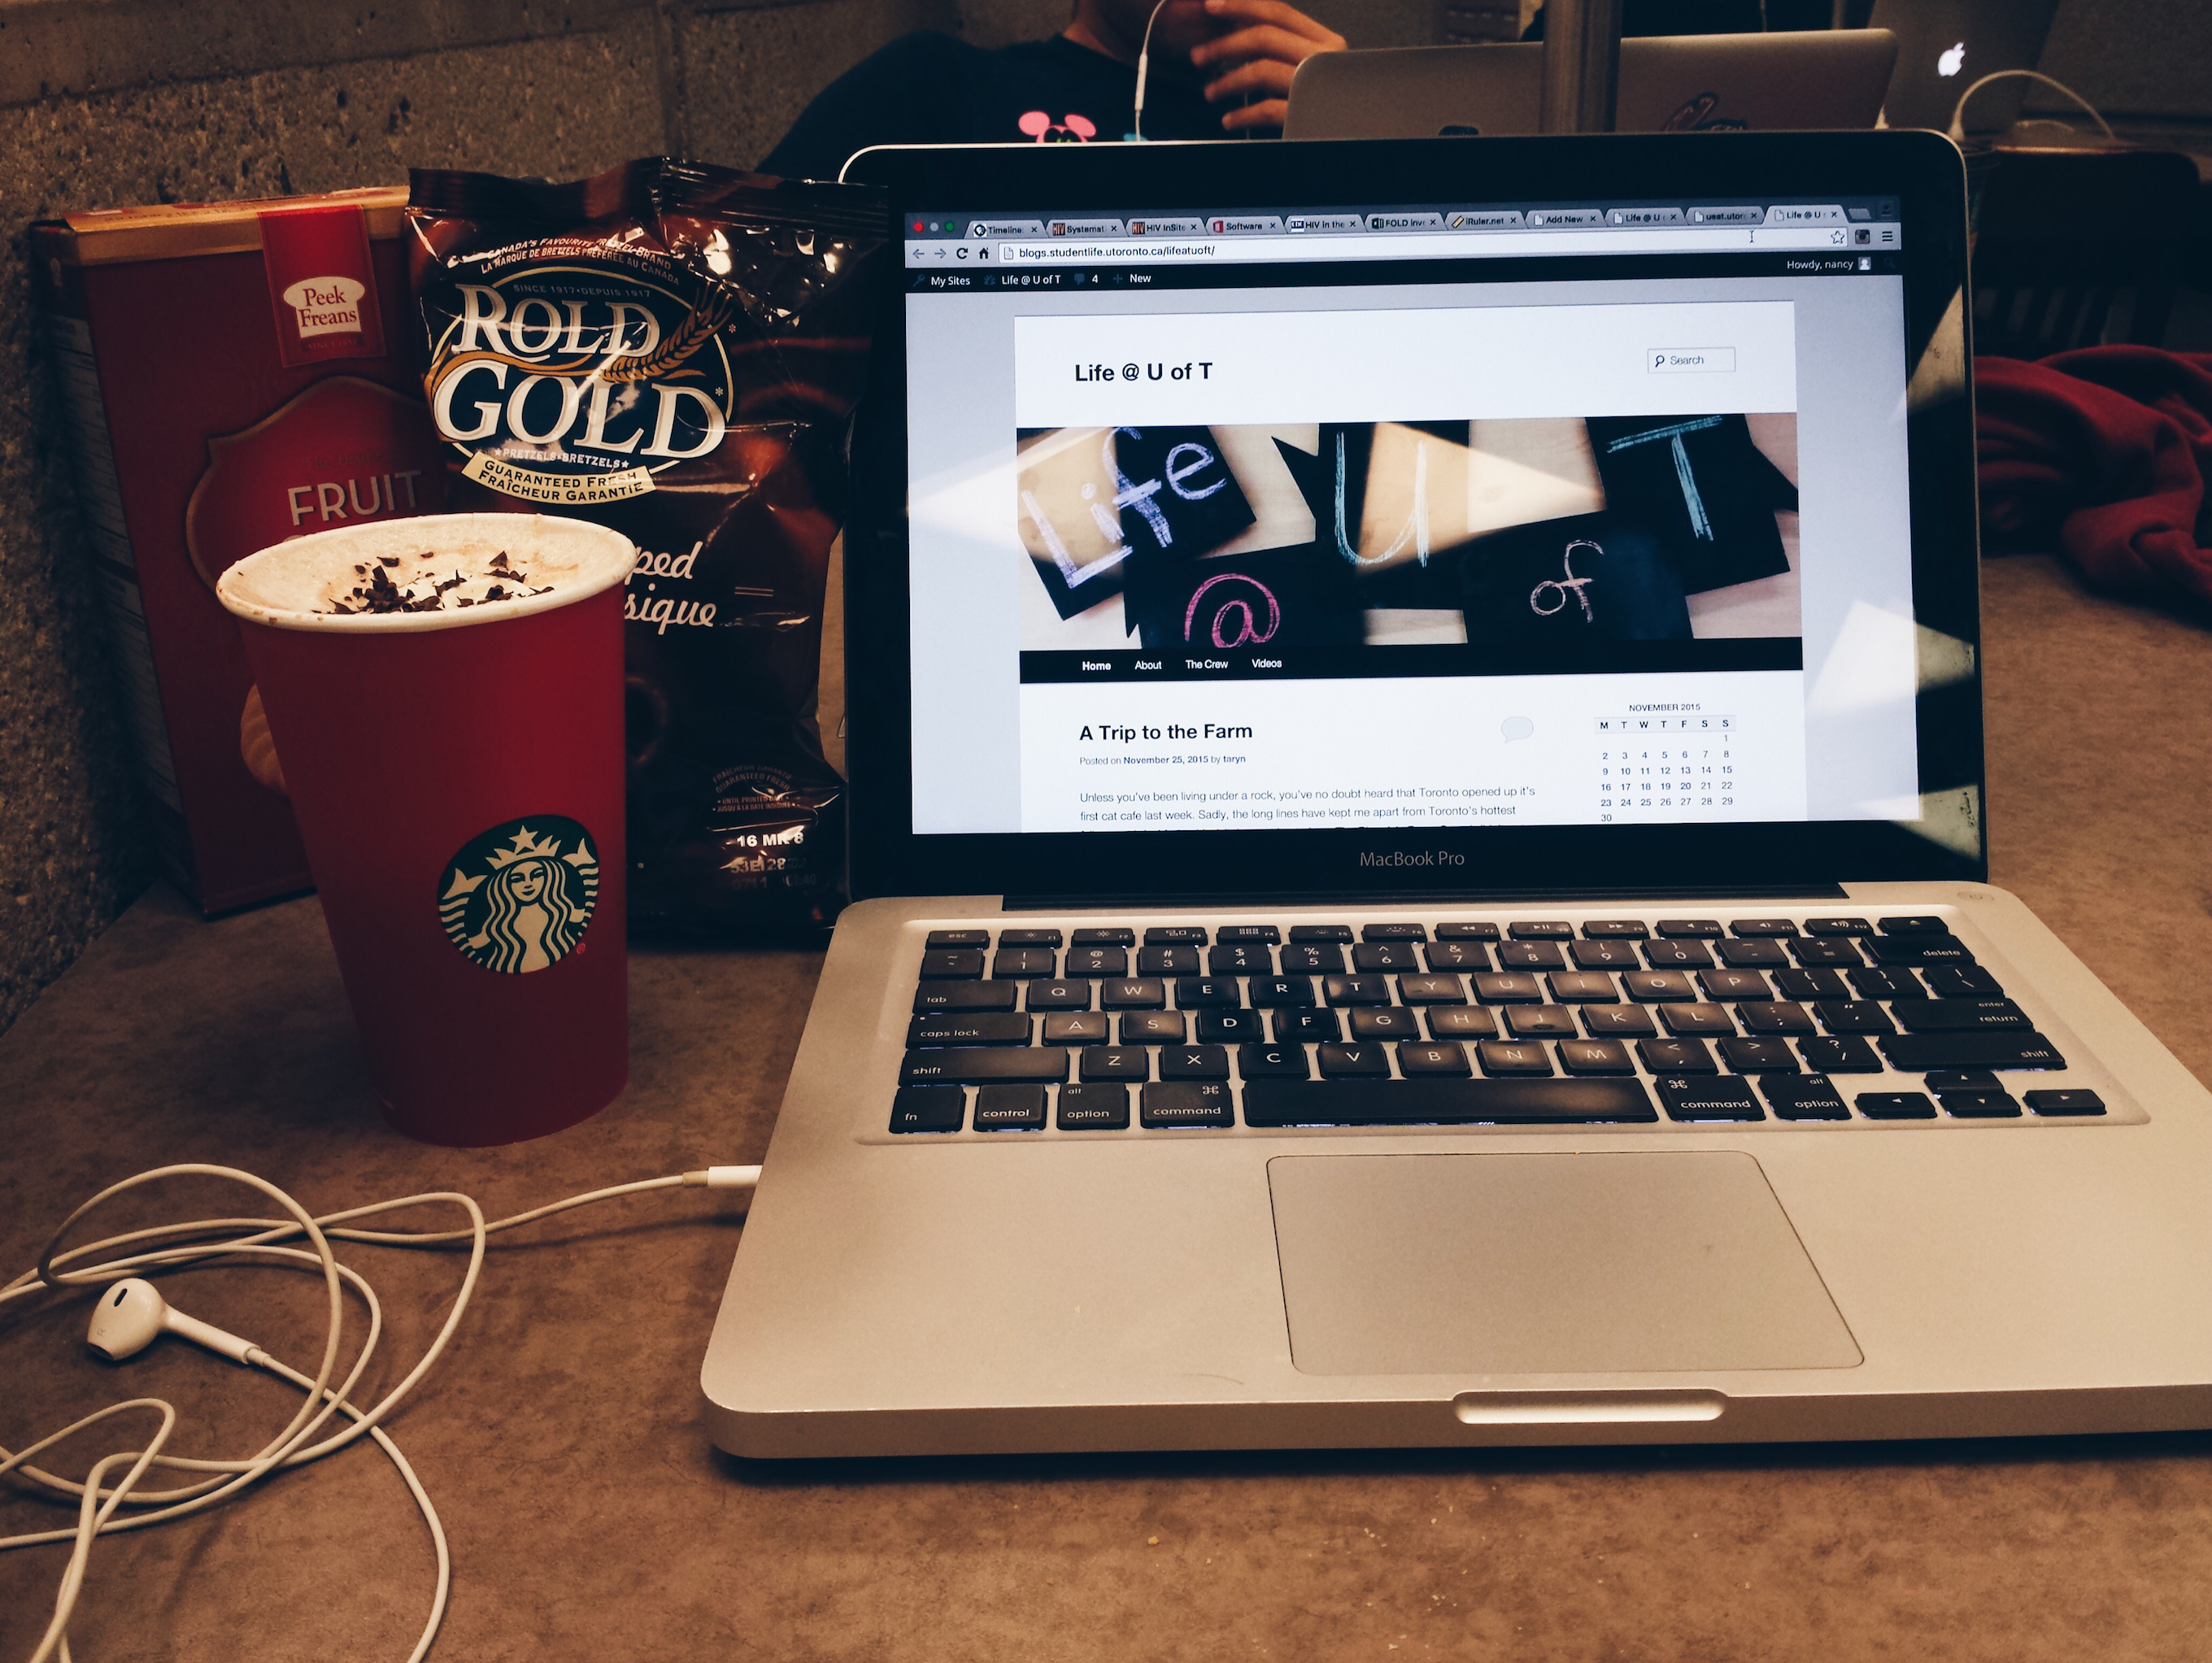 My laptop, earphones, a Starbucks cup, and a bag of Pretzals on a desk at Robarts.